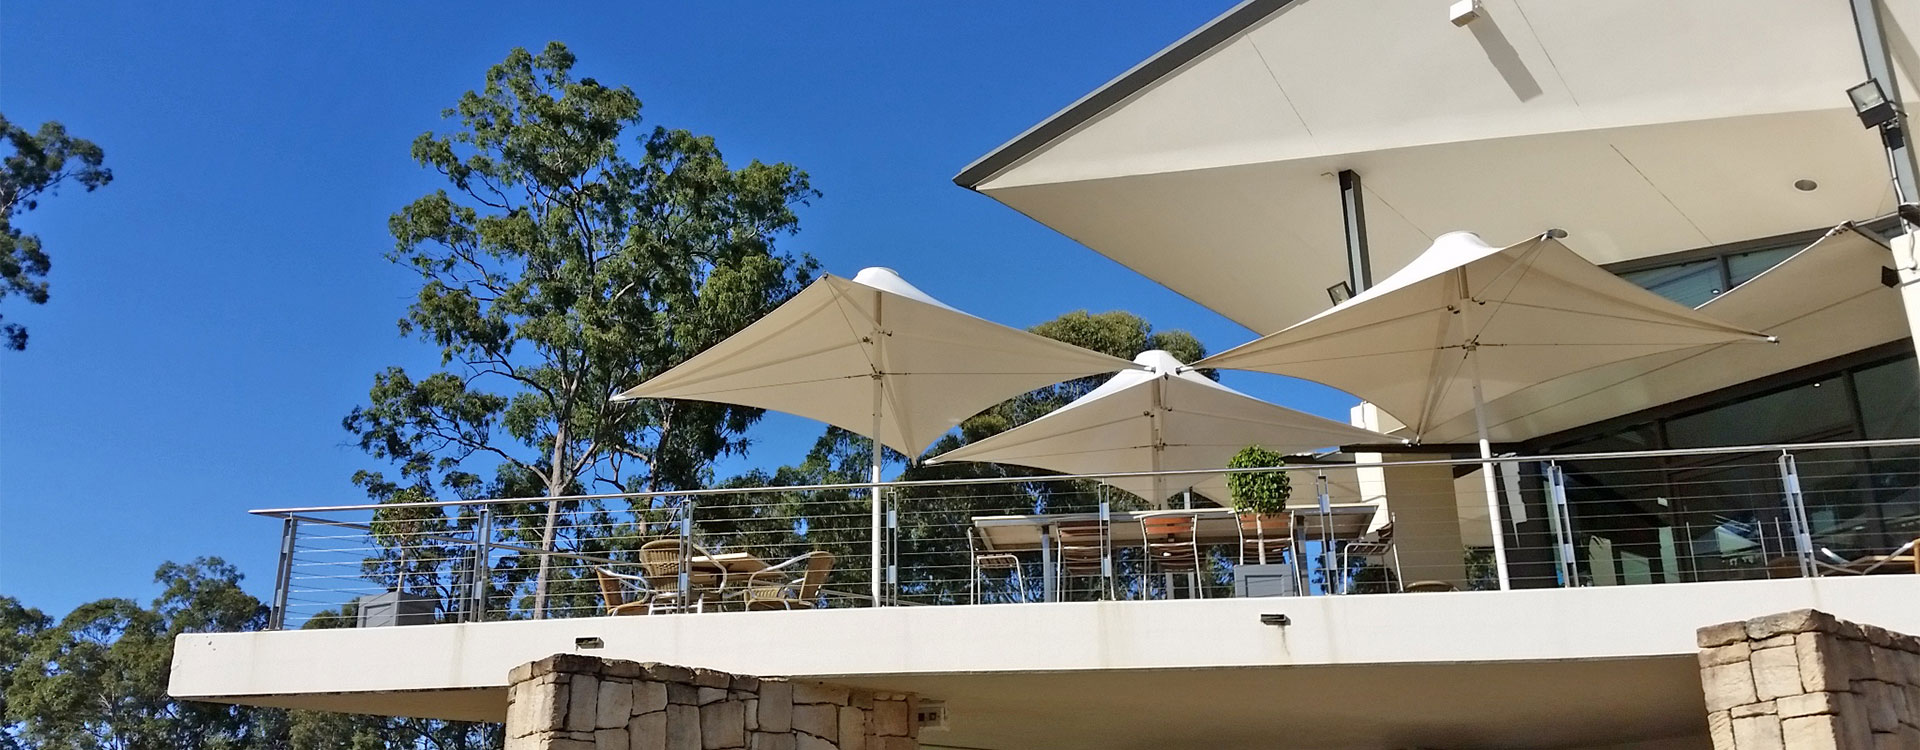 Alfresco Dining Shade Structures; Commercial Umbrellas